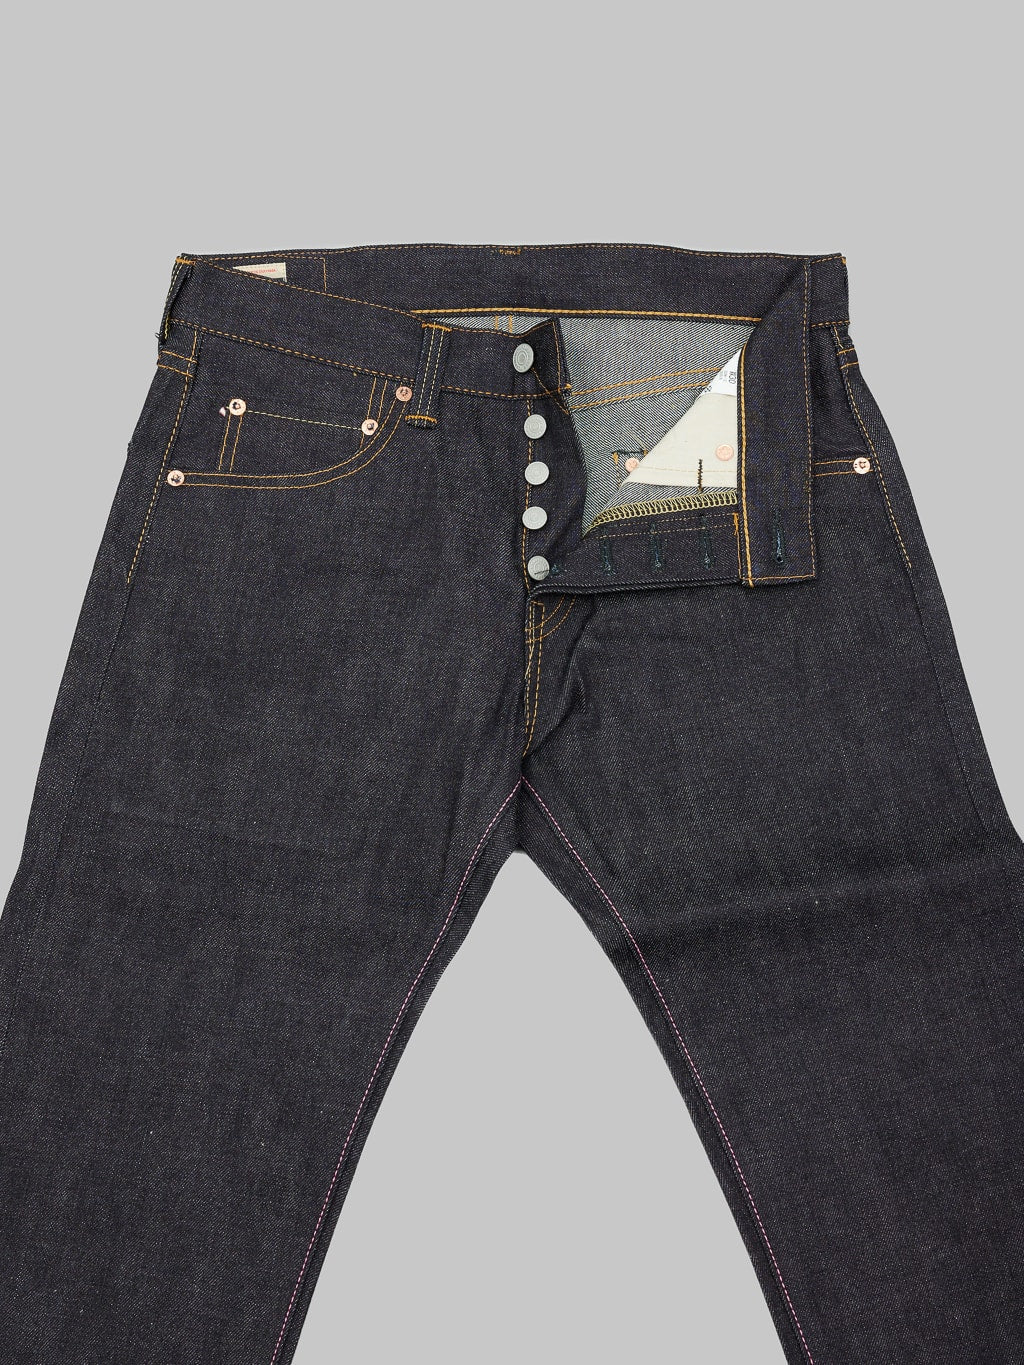 momotaro jeans 0306 12 12oz selvedge denim tight tapered mid waist